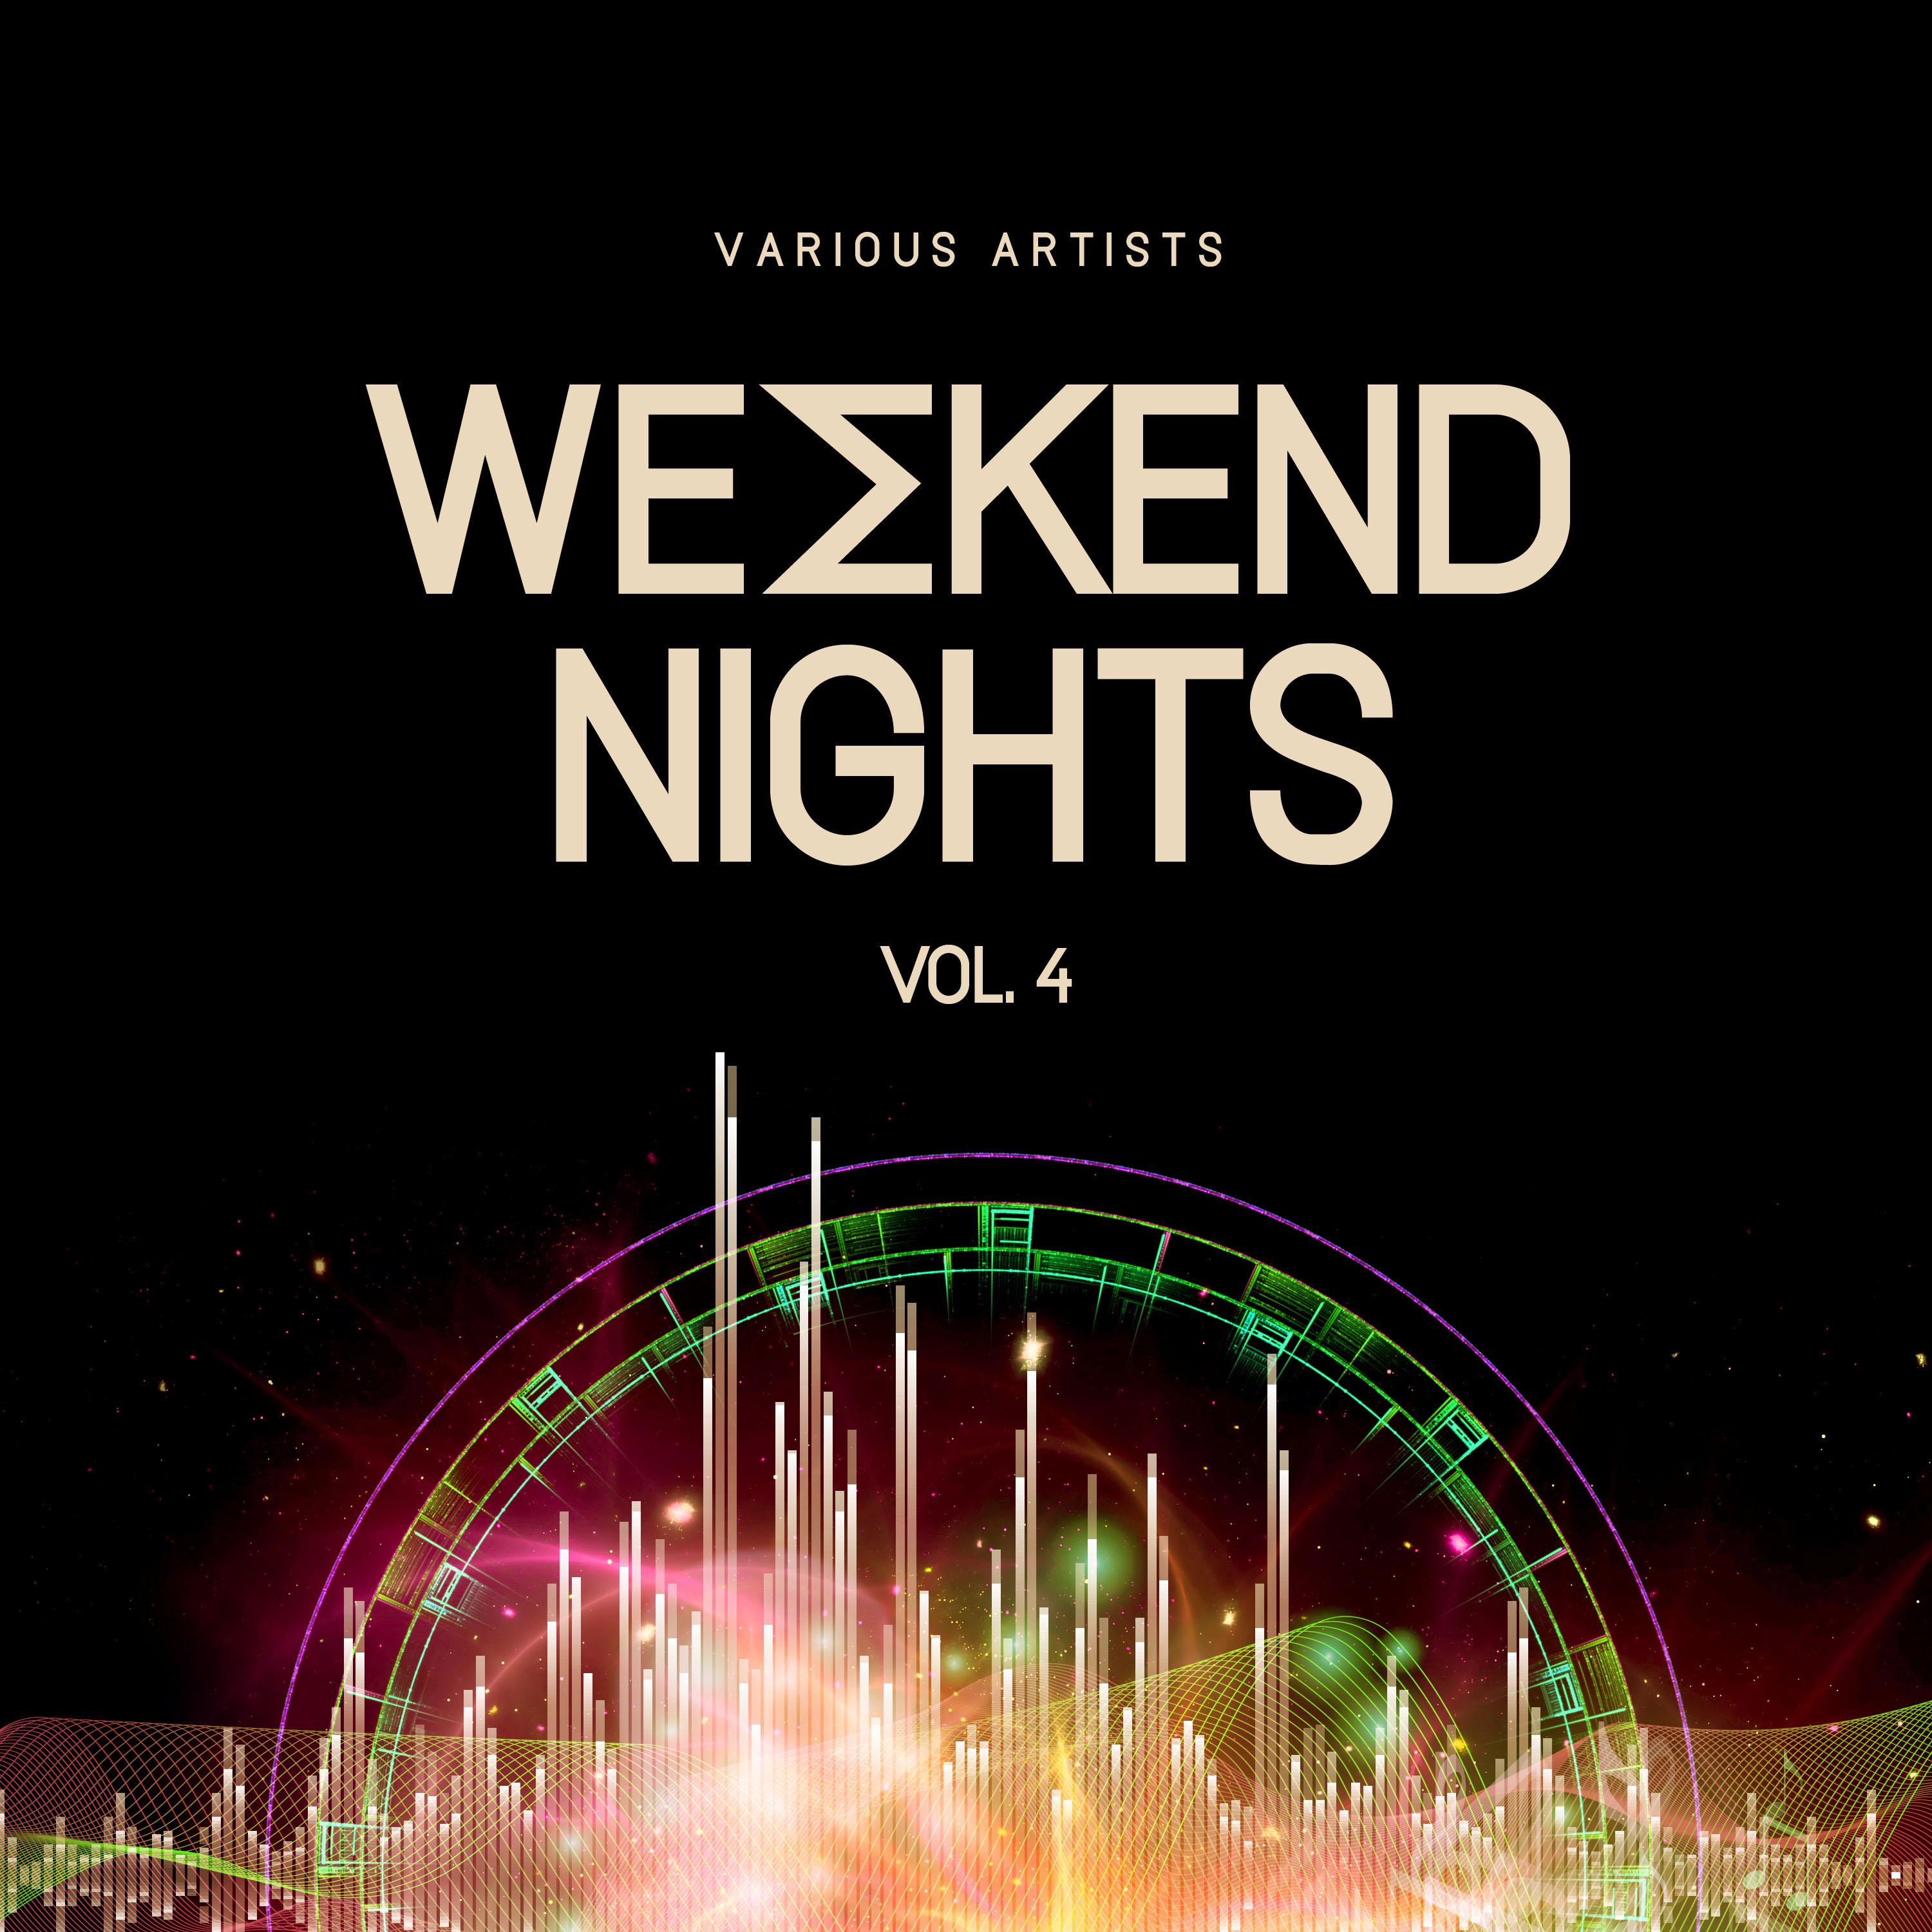 RaFF_T - Weekend Night (Original Mix)